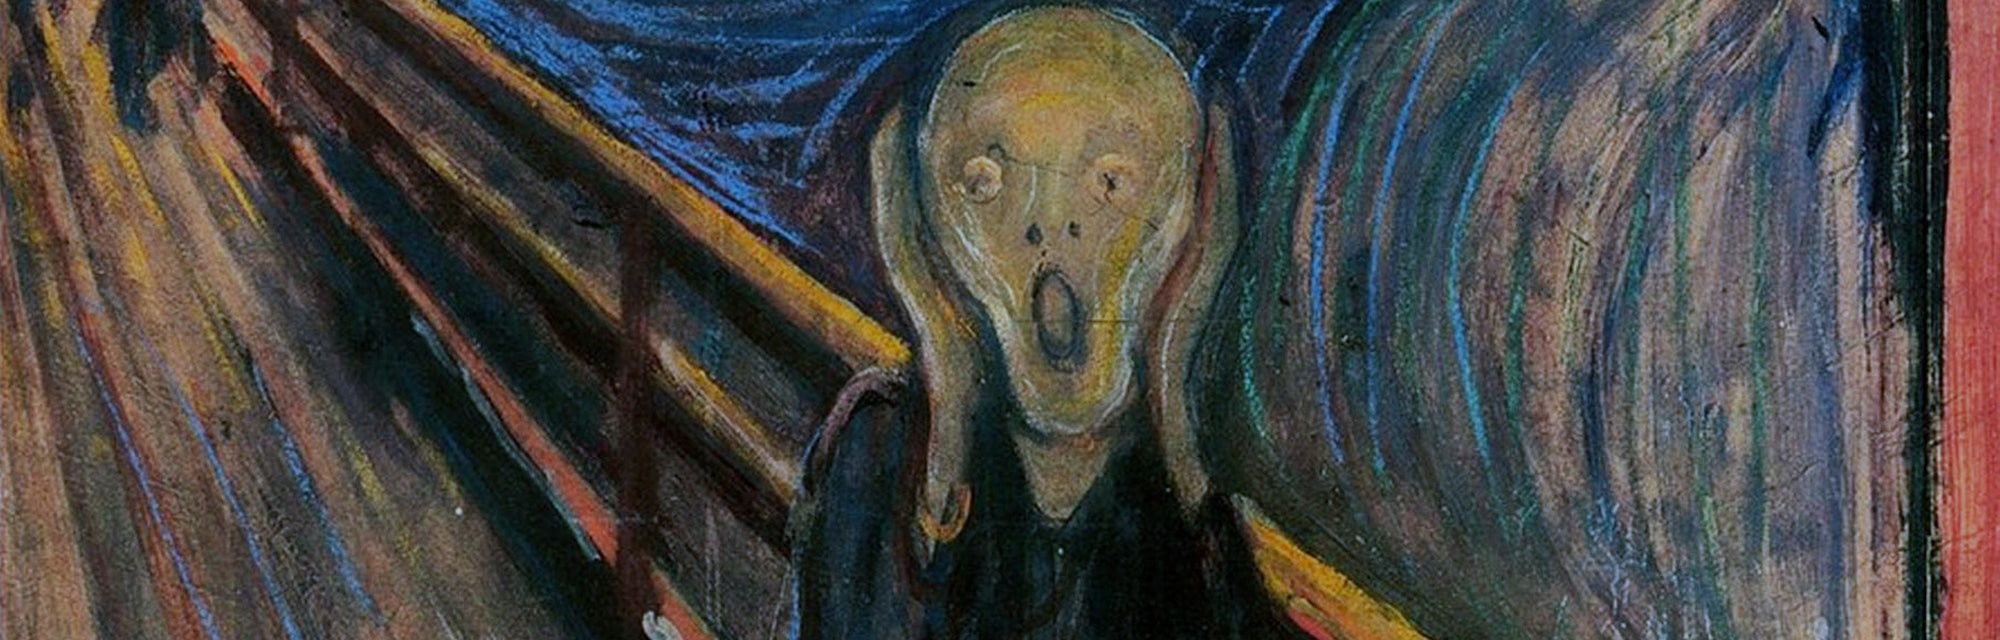 Edvard Much's "The Scream"